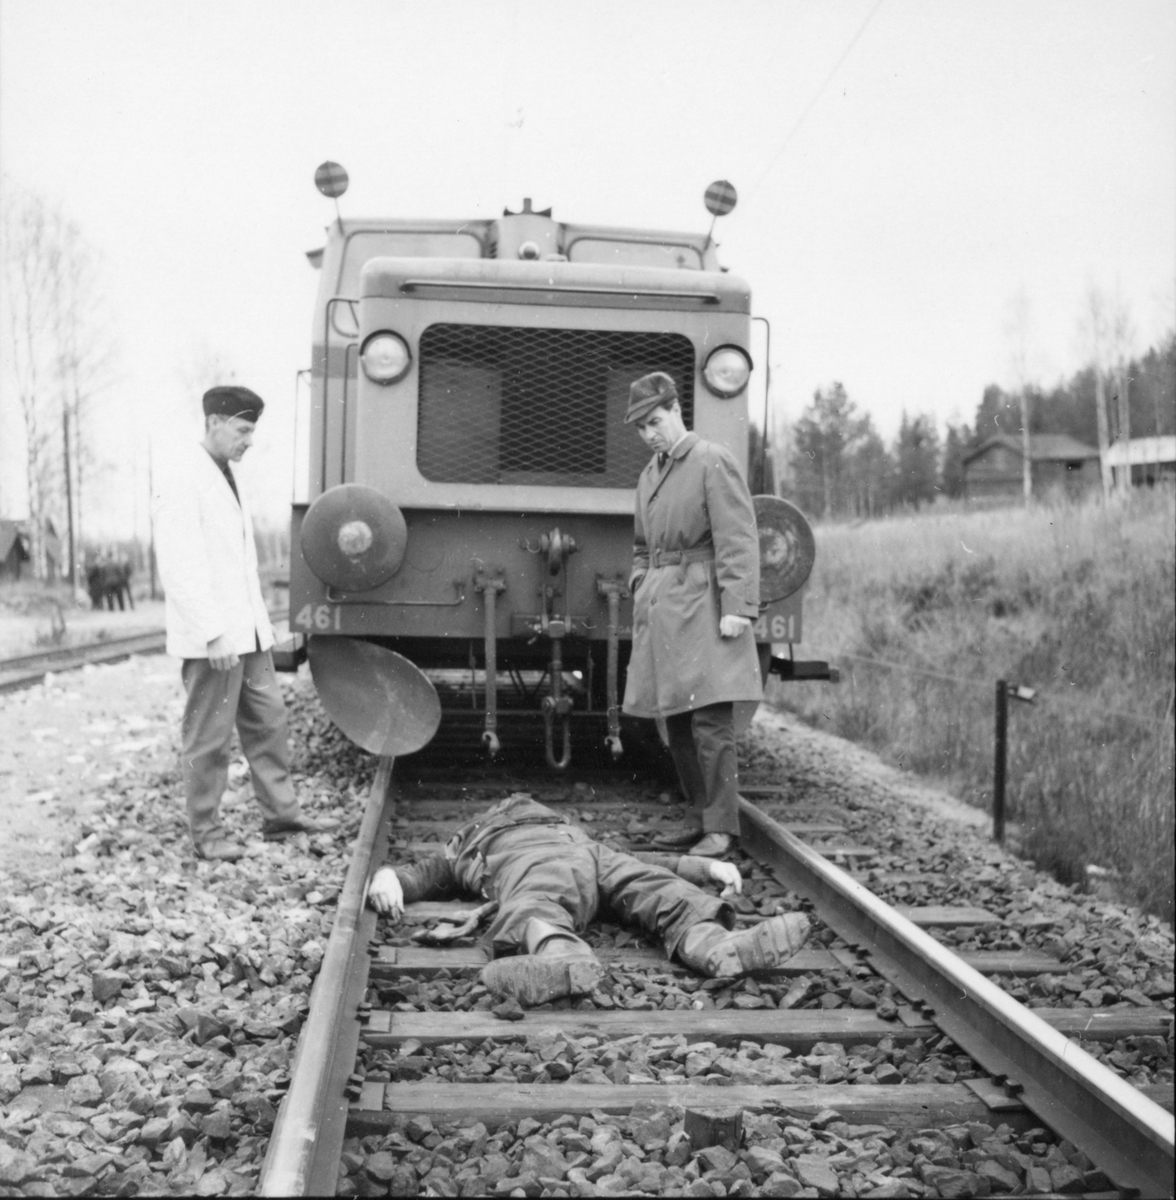 Trafikolycka vid Norrborn.
14/11 1962